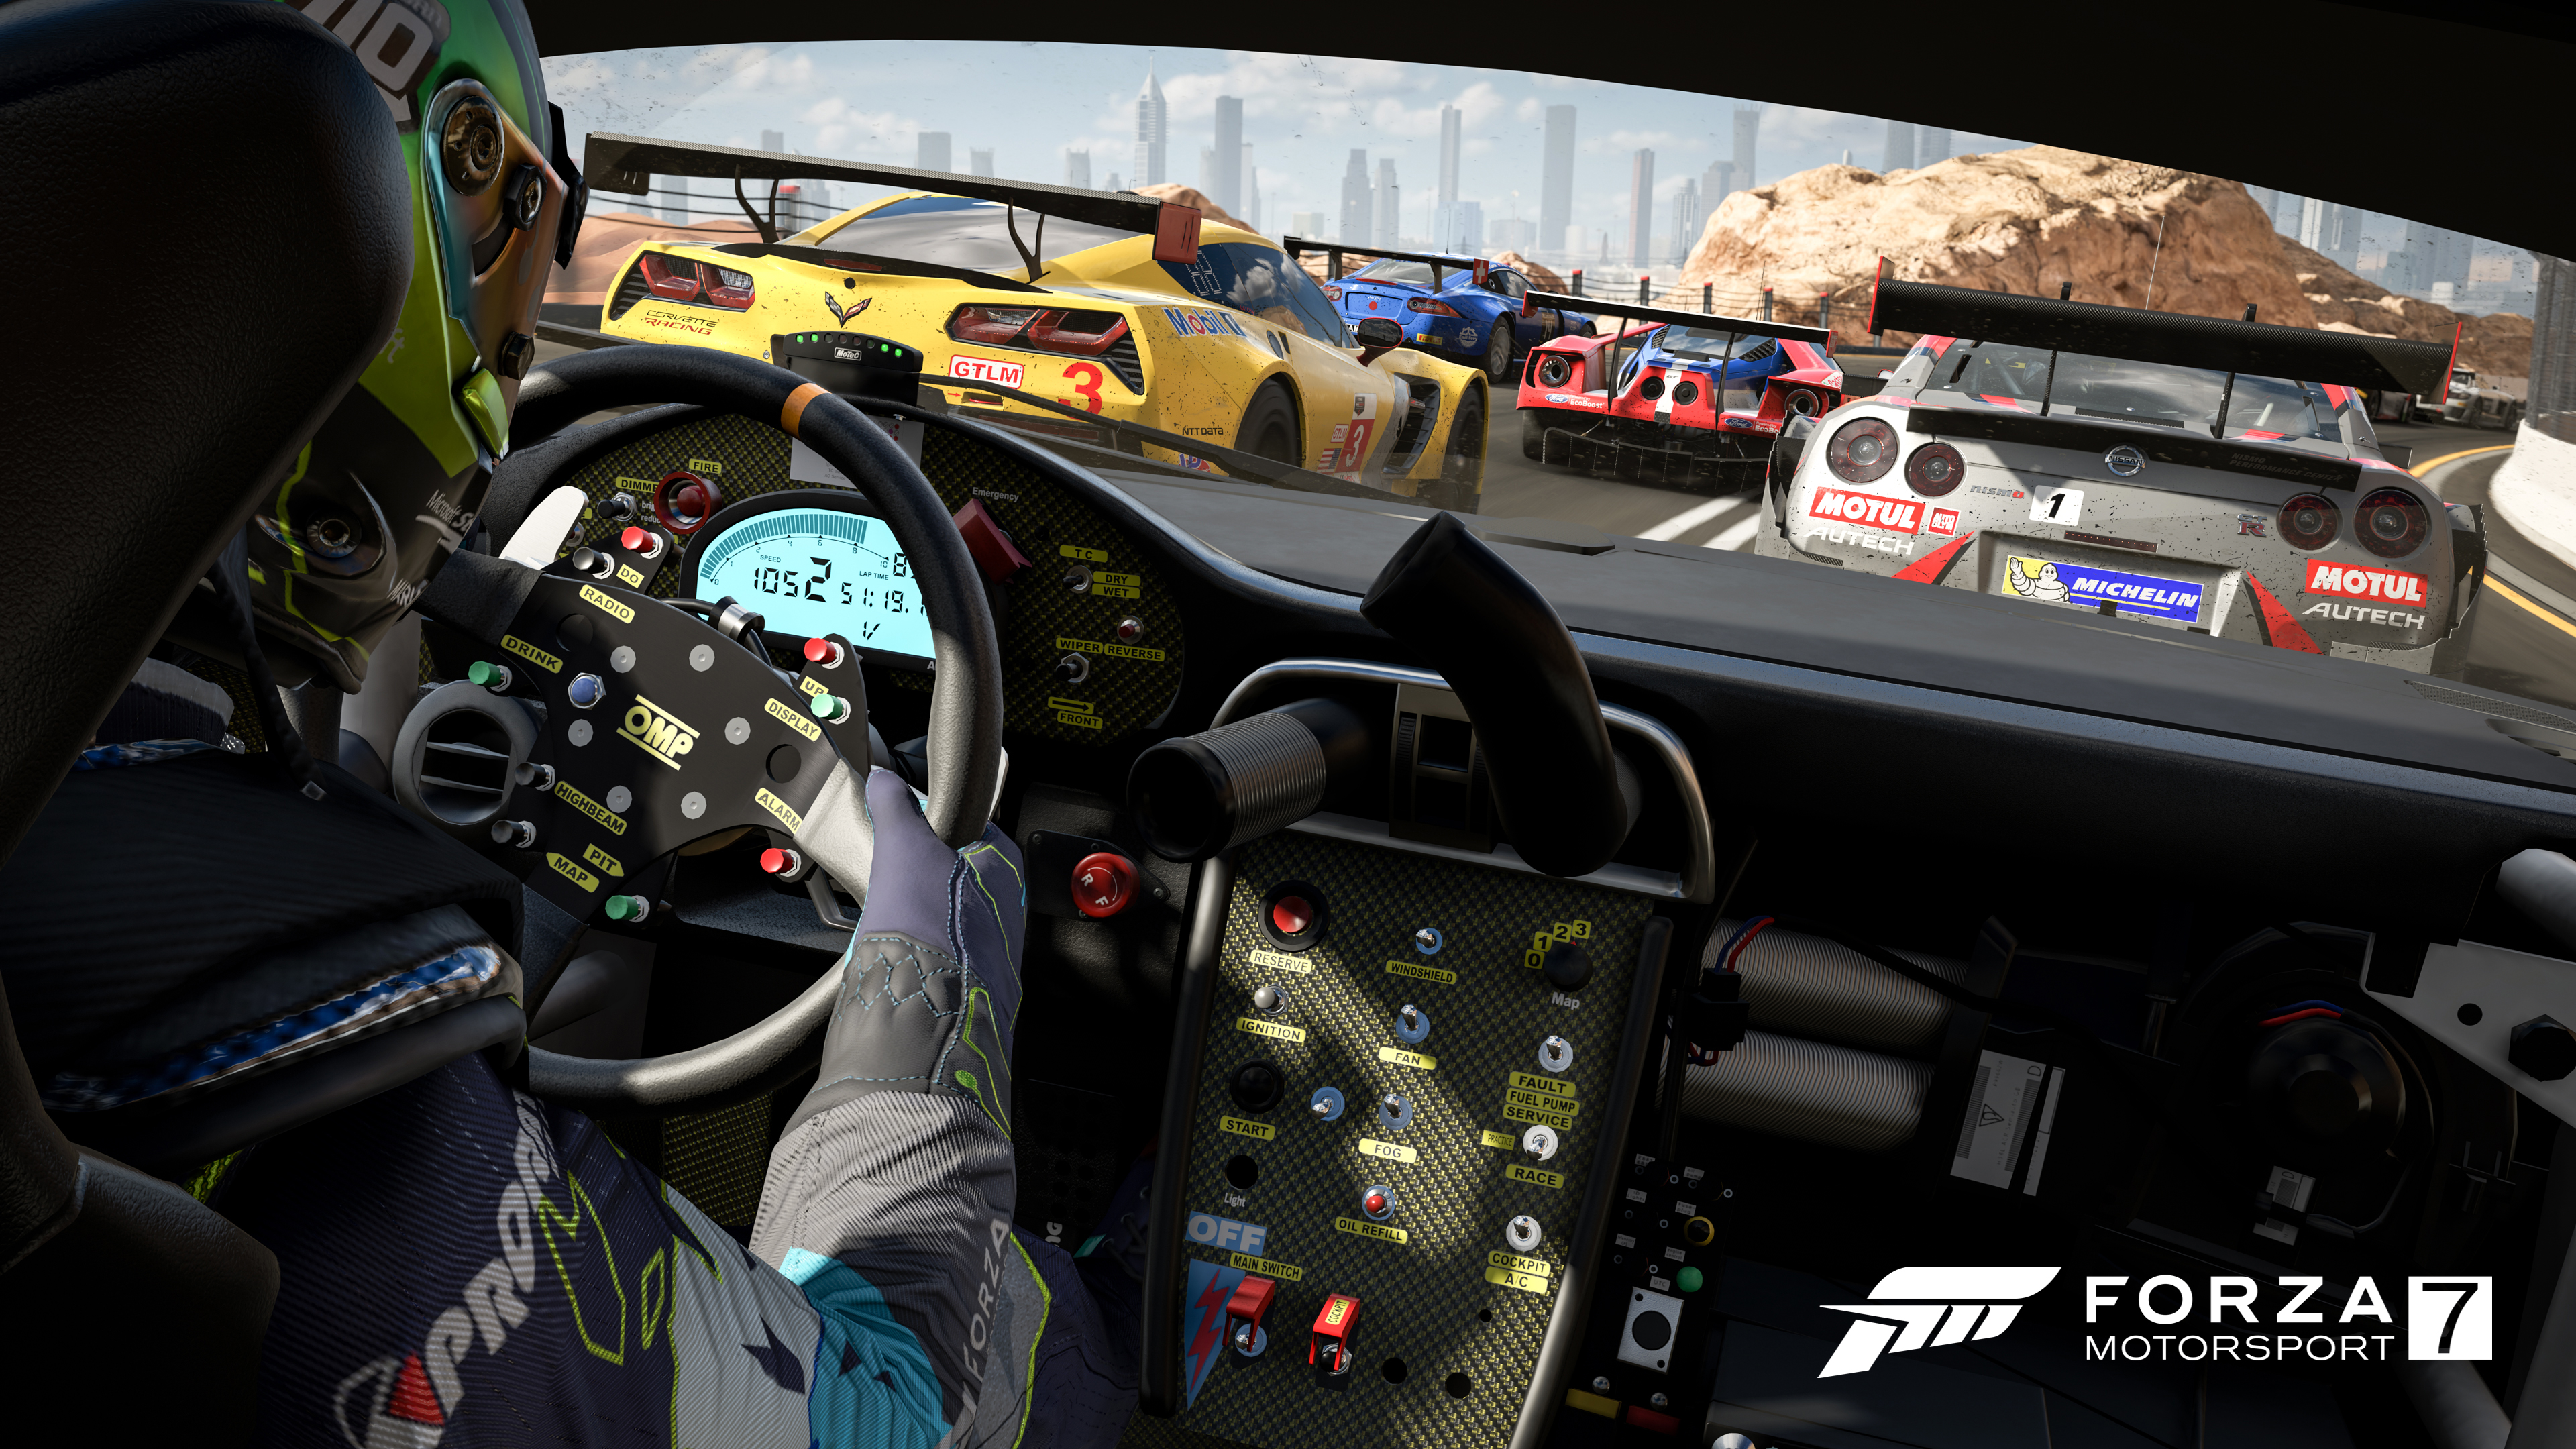 Forza 7 Motorsport interior of race car